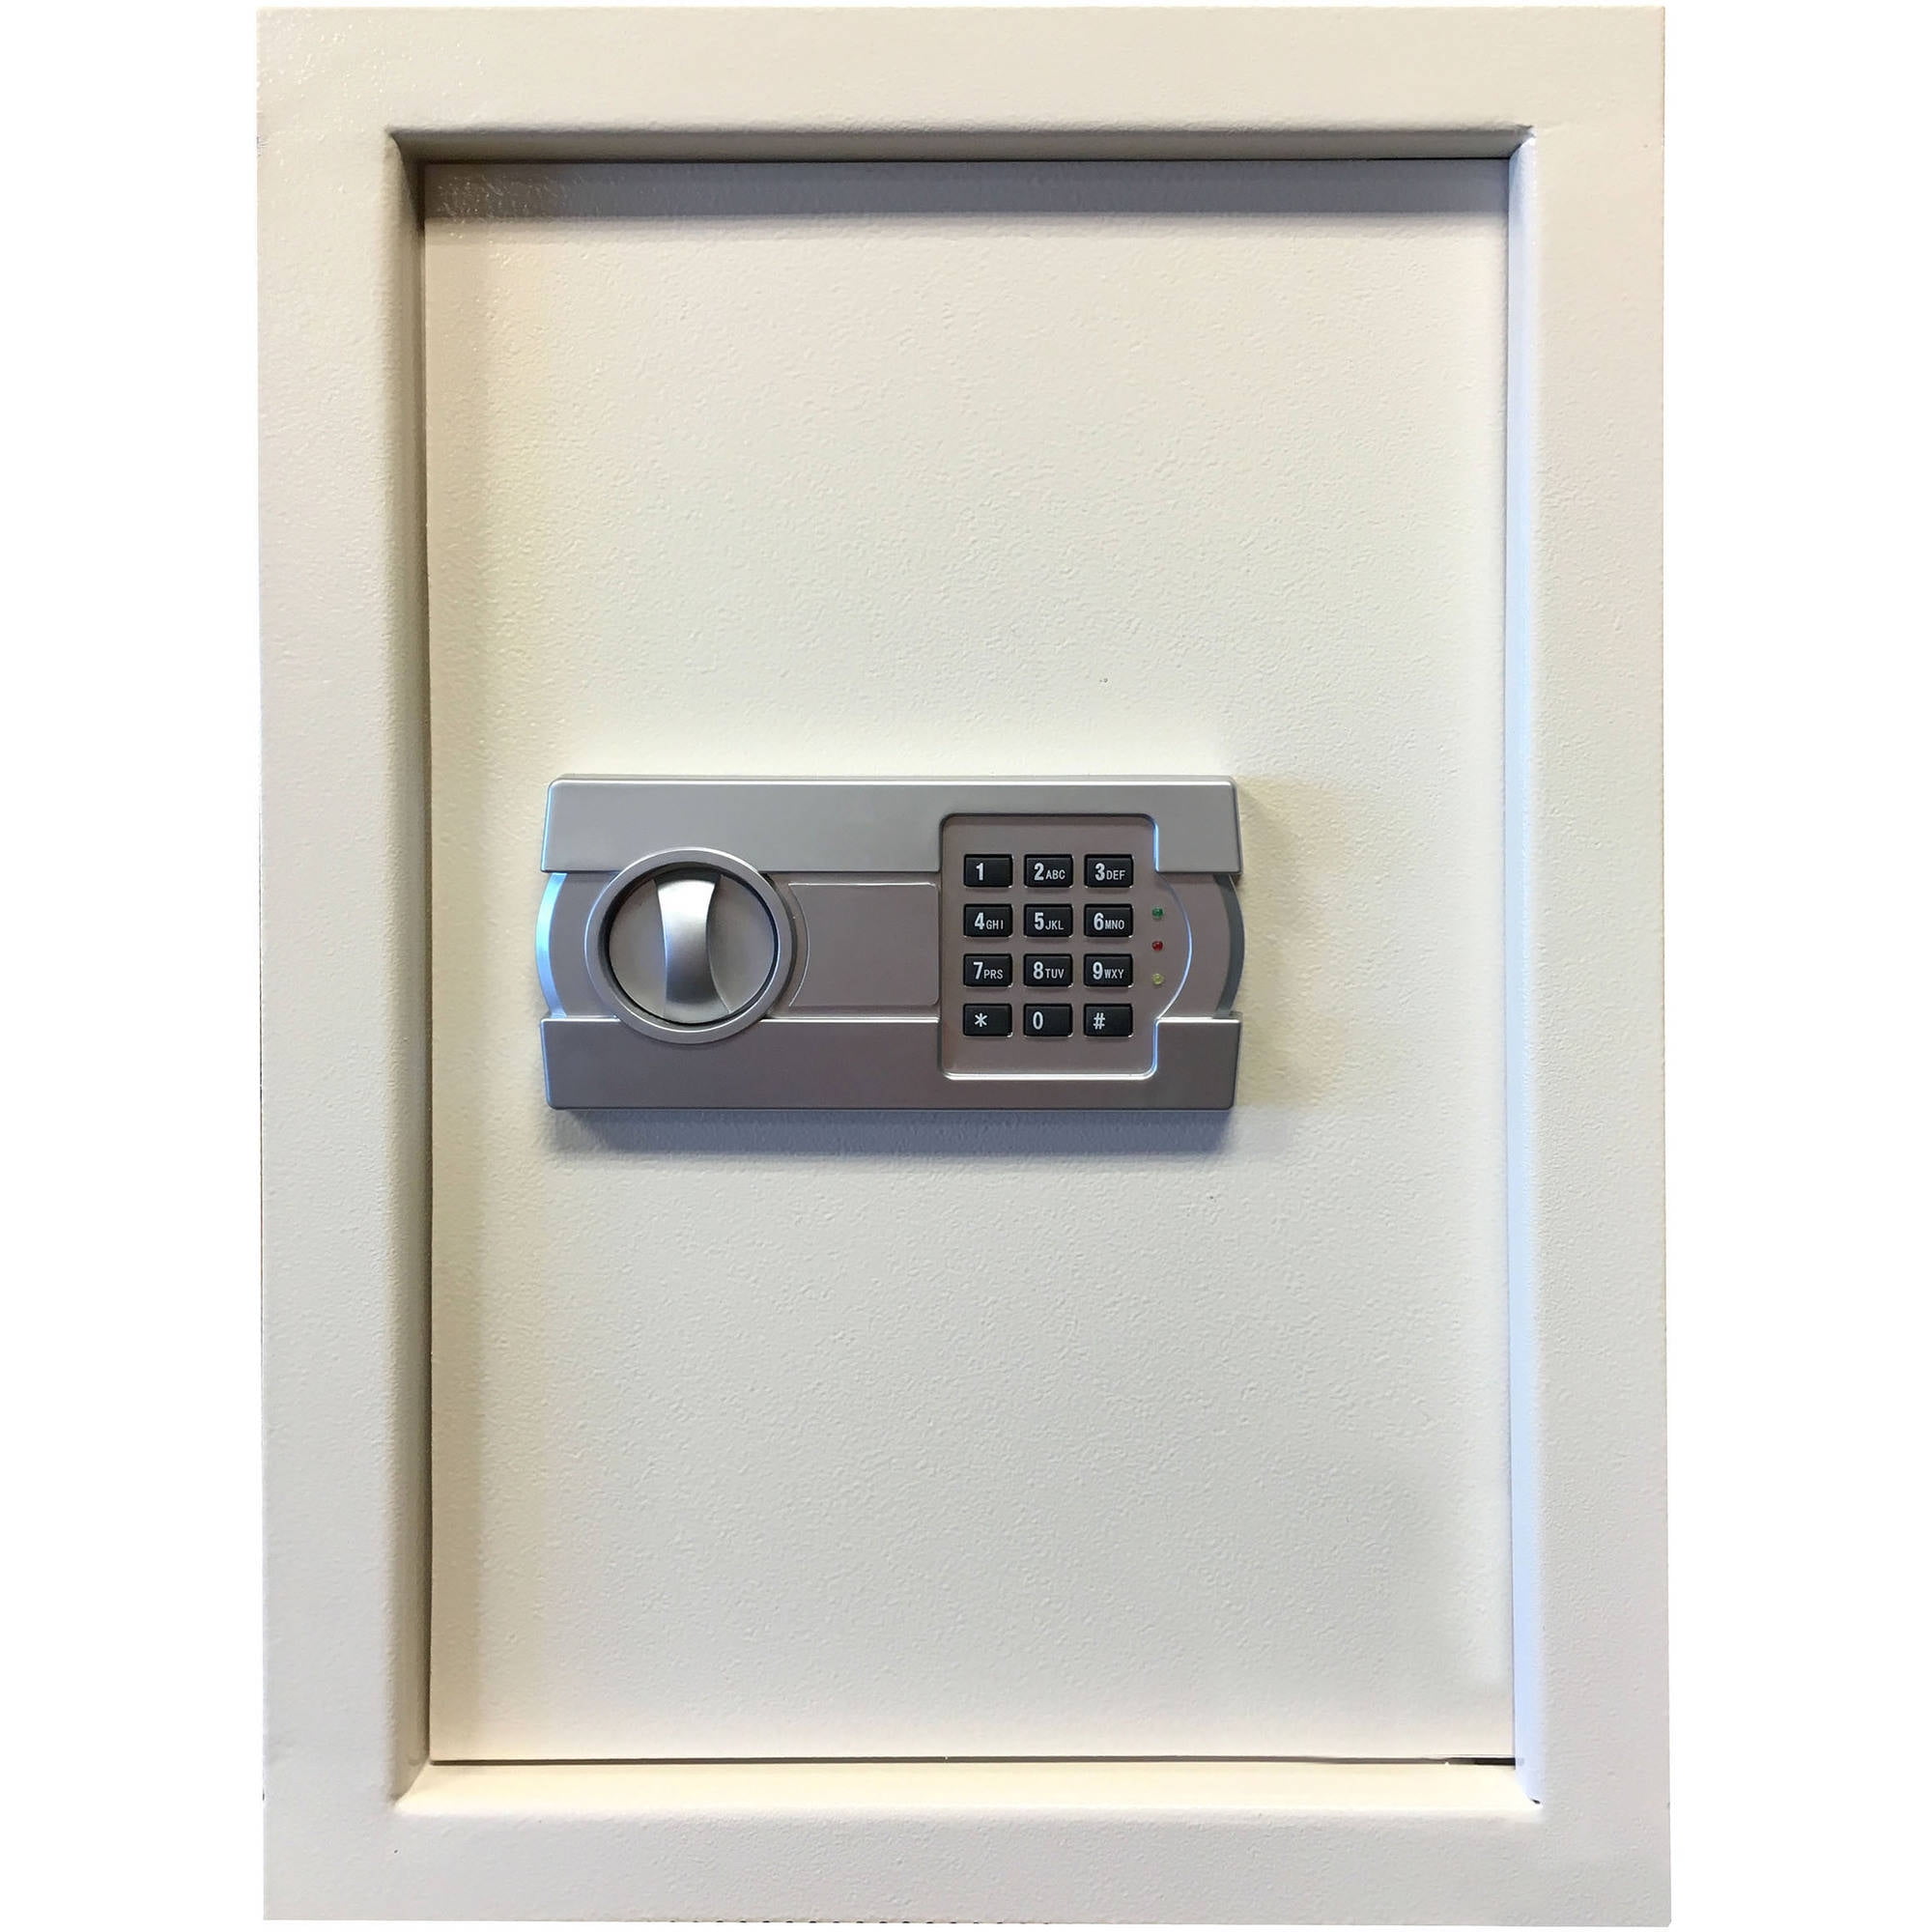 Recessed Secret Hidden Security Cash Jewelry Gun Wall Safe Box Pin & Key Lock 